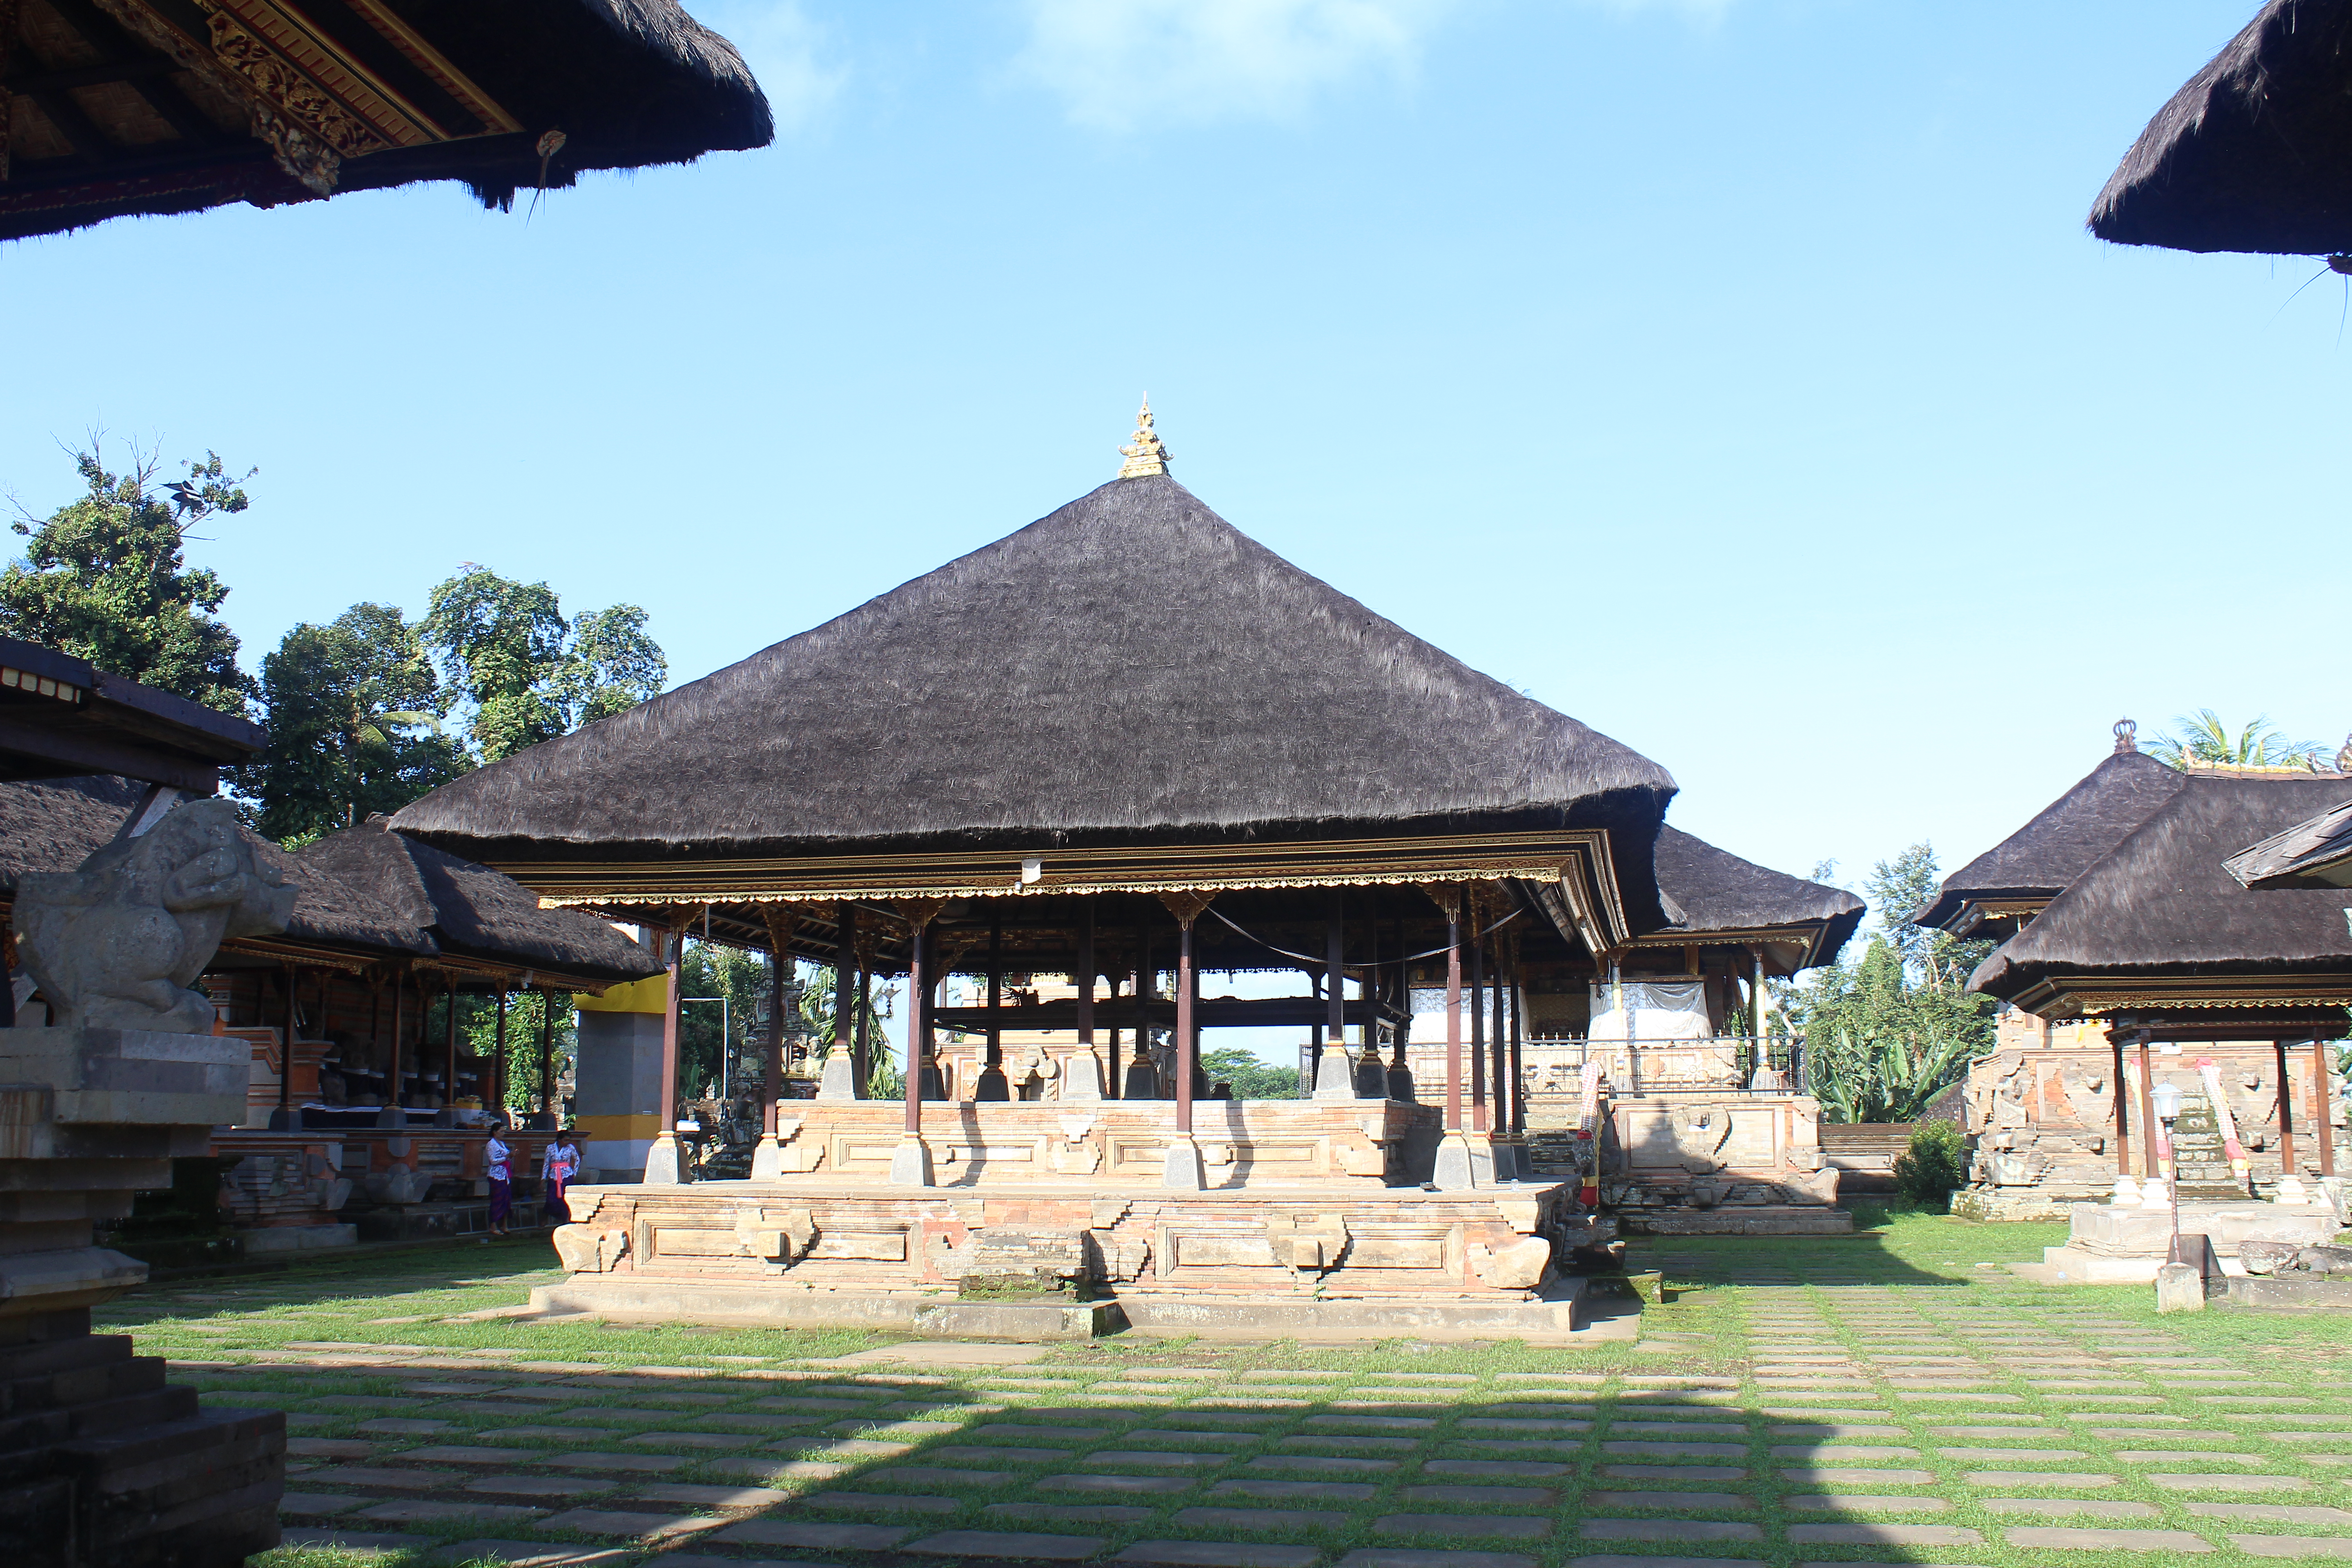 Thatch hut shrine complex with overgrown pavestones